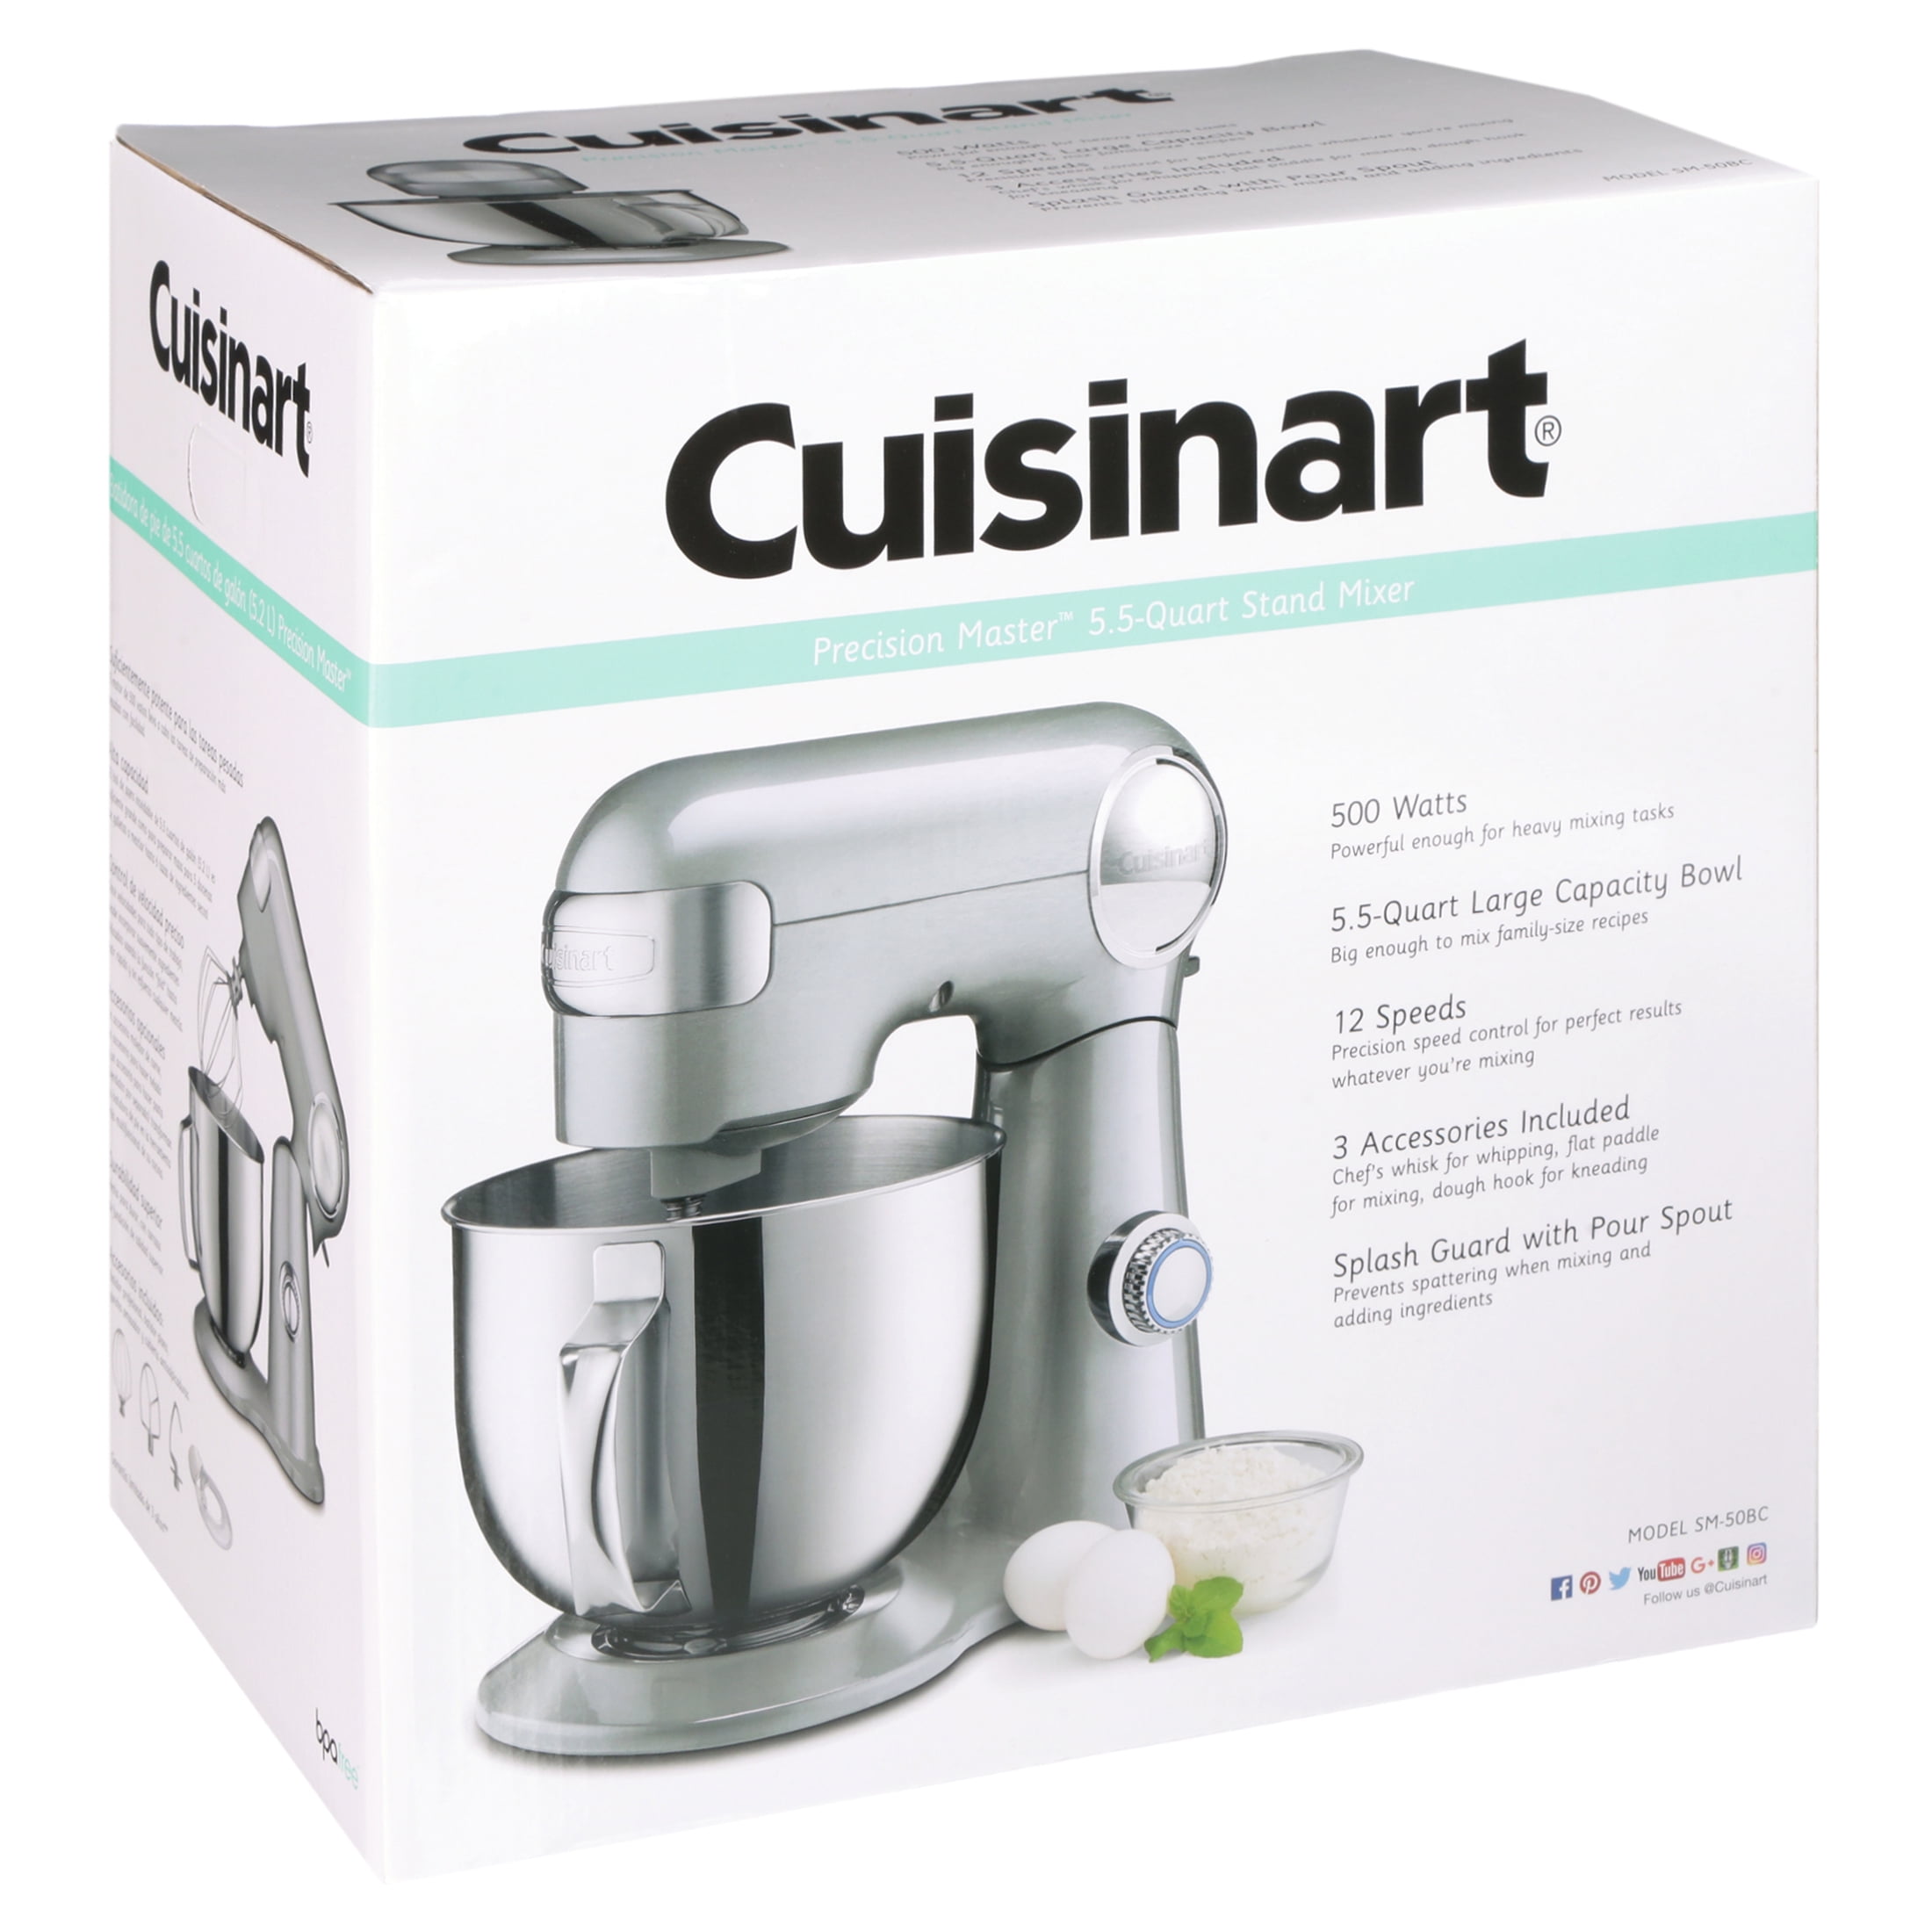 Cuisinart – 5.5-quart Stand Mixer, Recipient's Choice